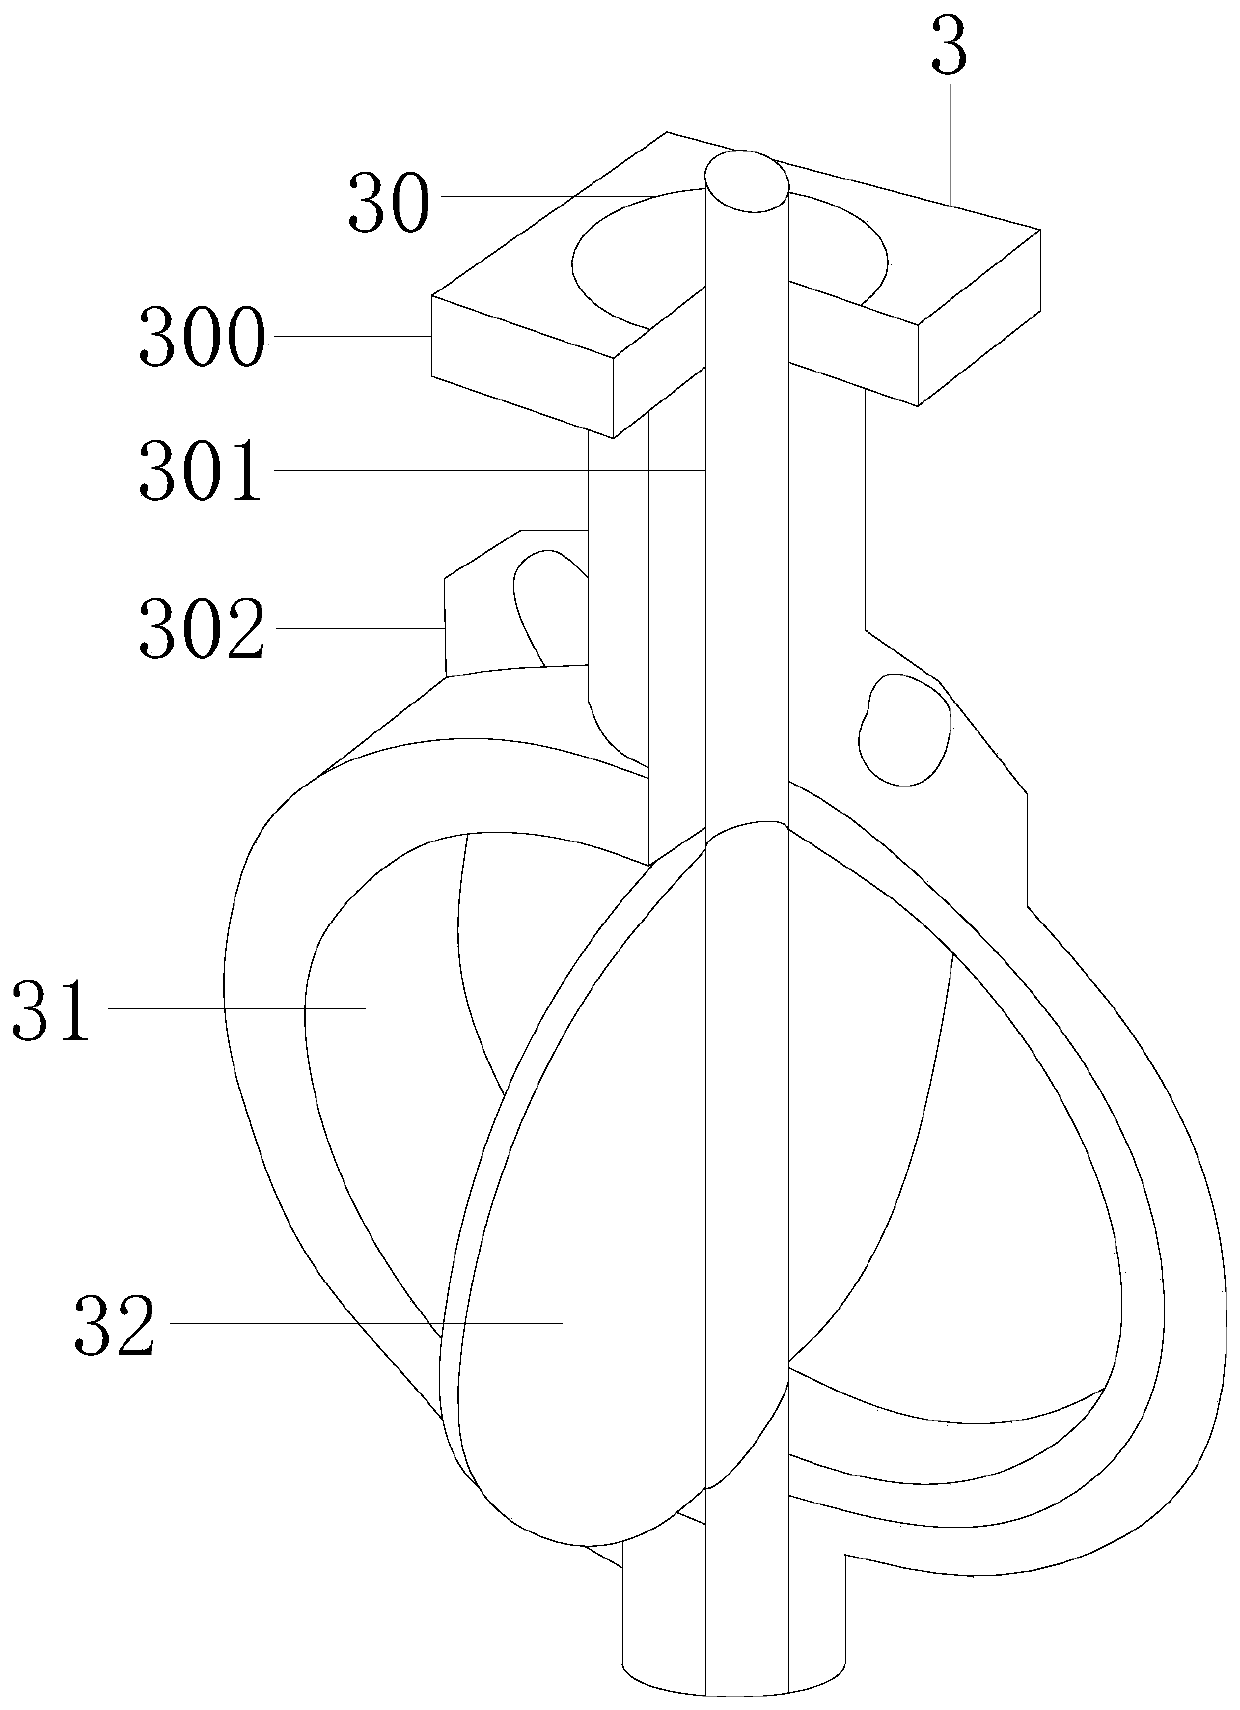 Inner valve spray hole reinforced sealing based magnetostrictive ultrasonic cleaning valve